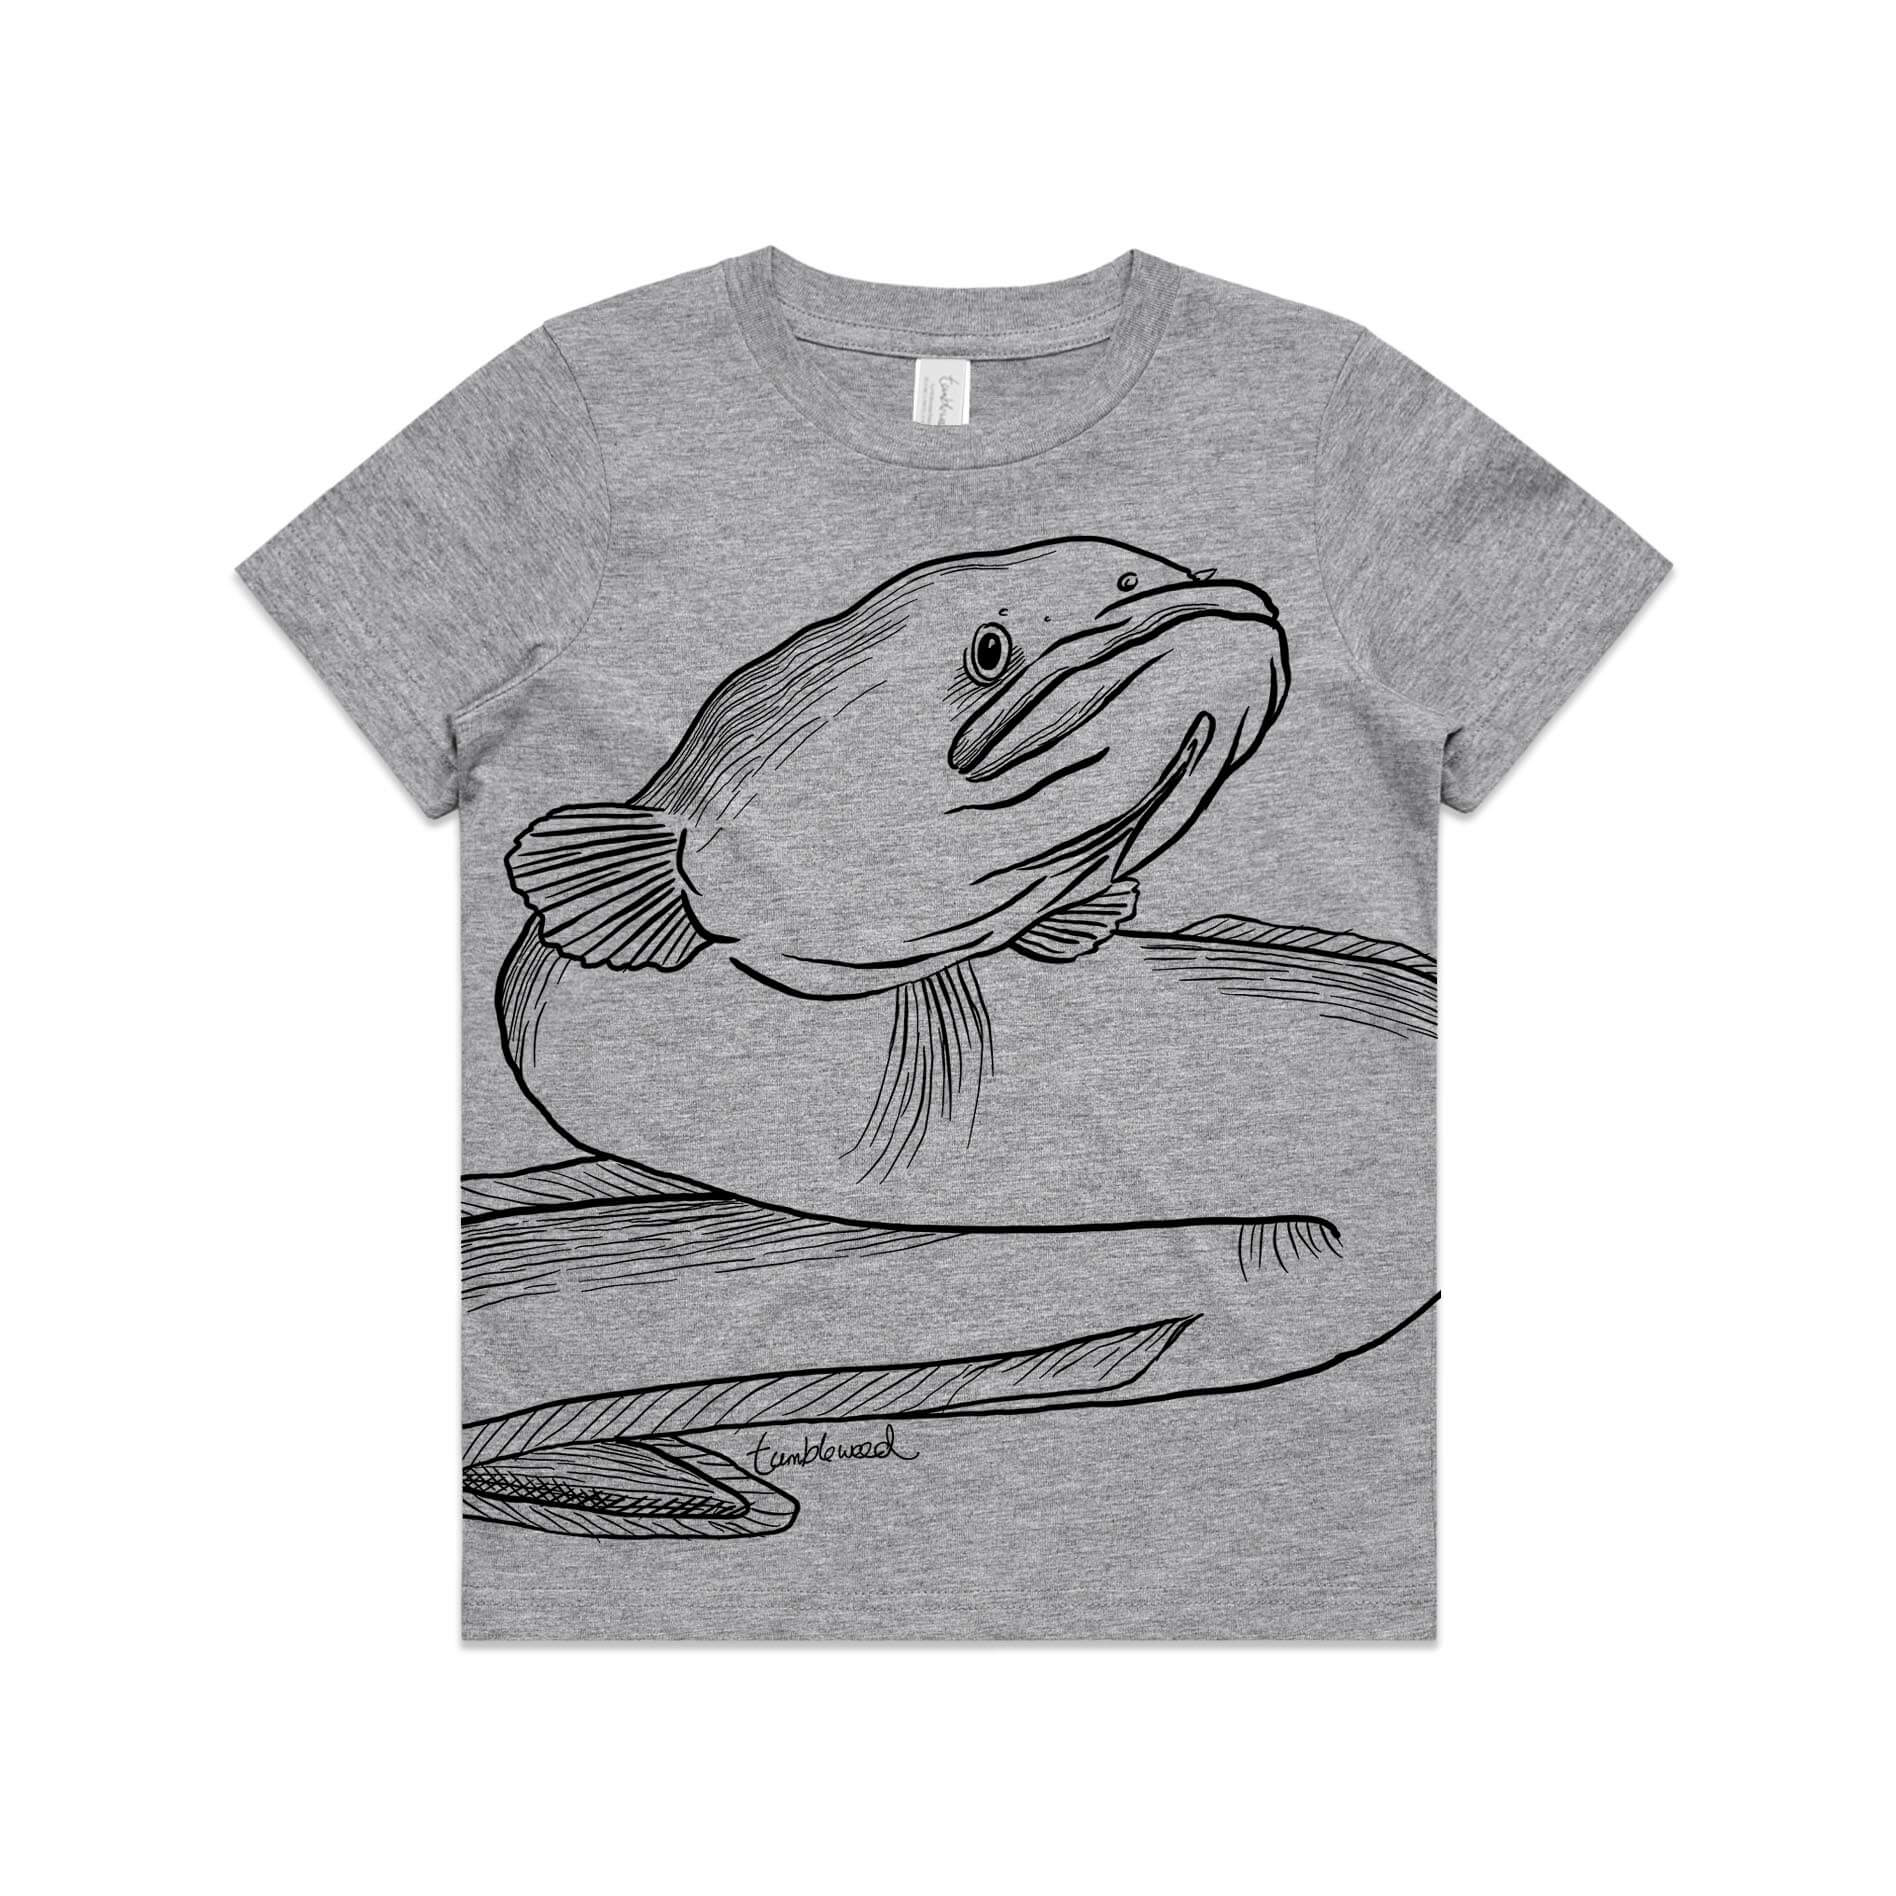 Grey marle, cotton kids' t-shirt with screen printed Long fin eel/tuna design.